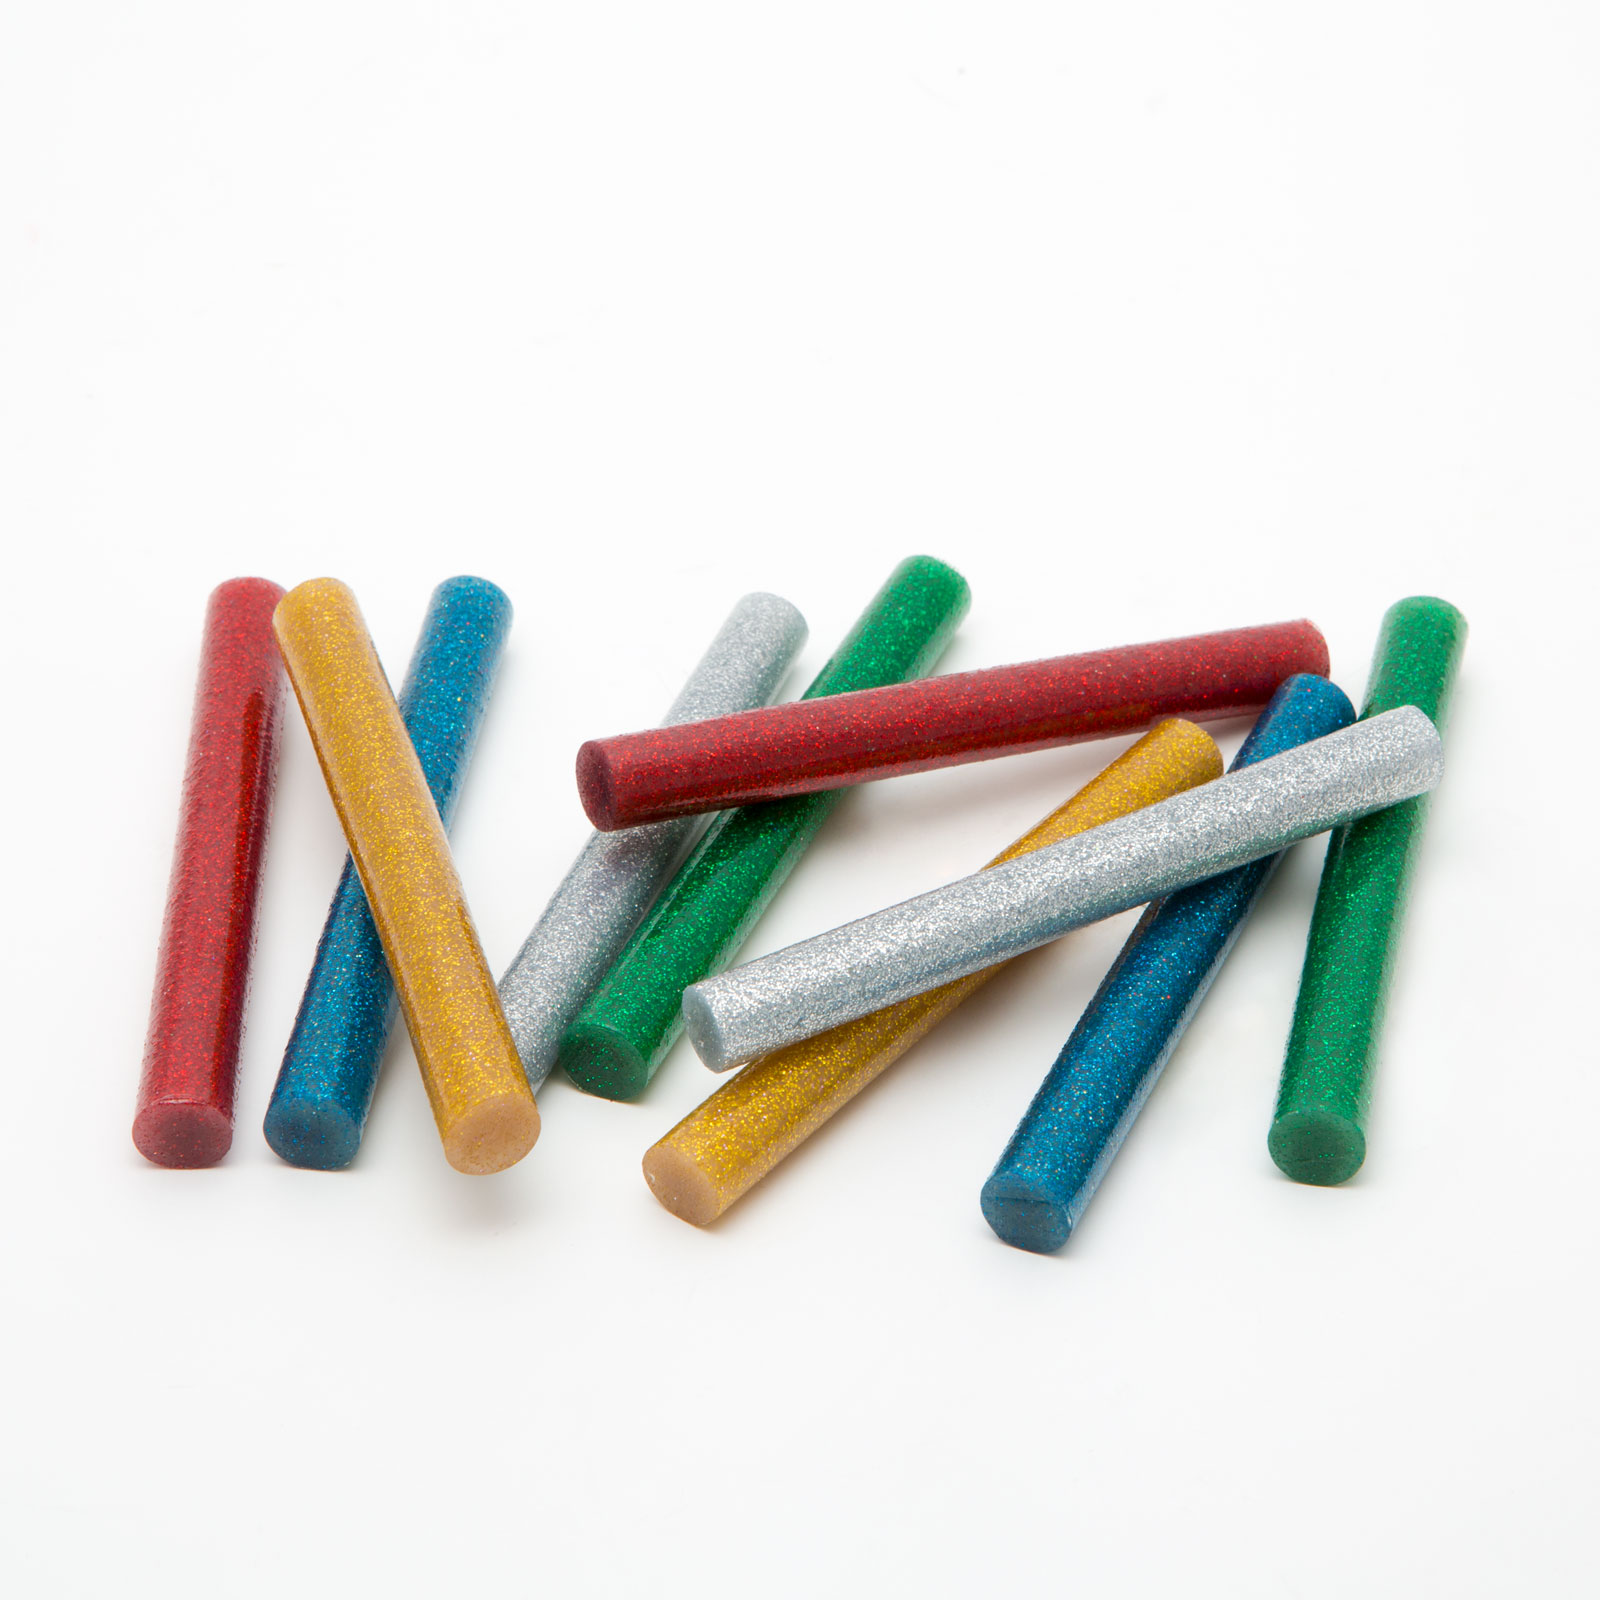 Hot glue stick - 11 mm - colorful, glittering thumb